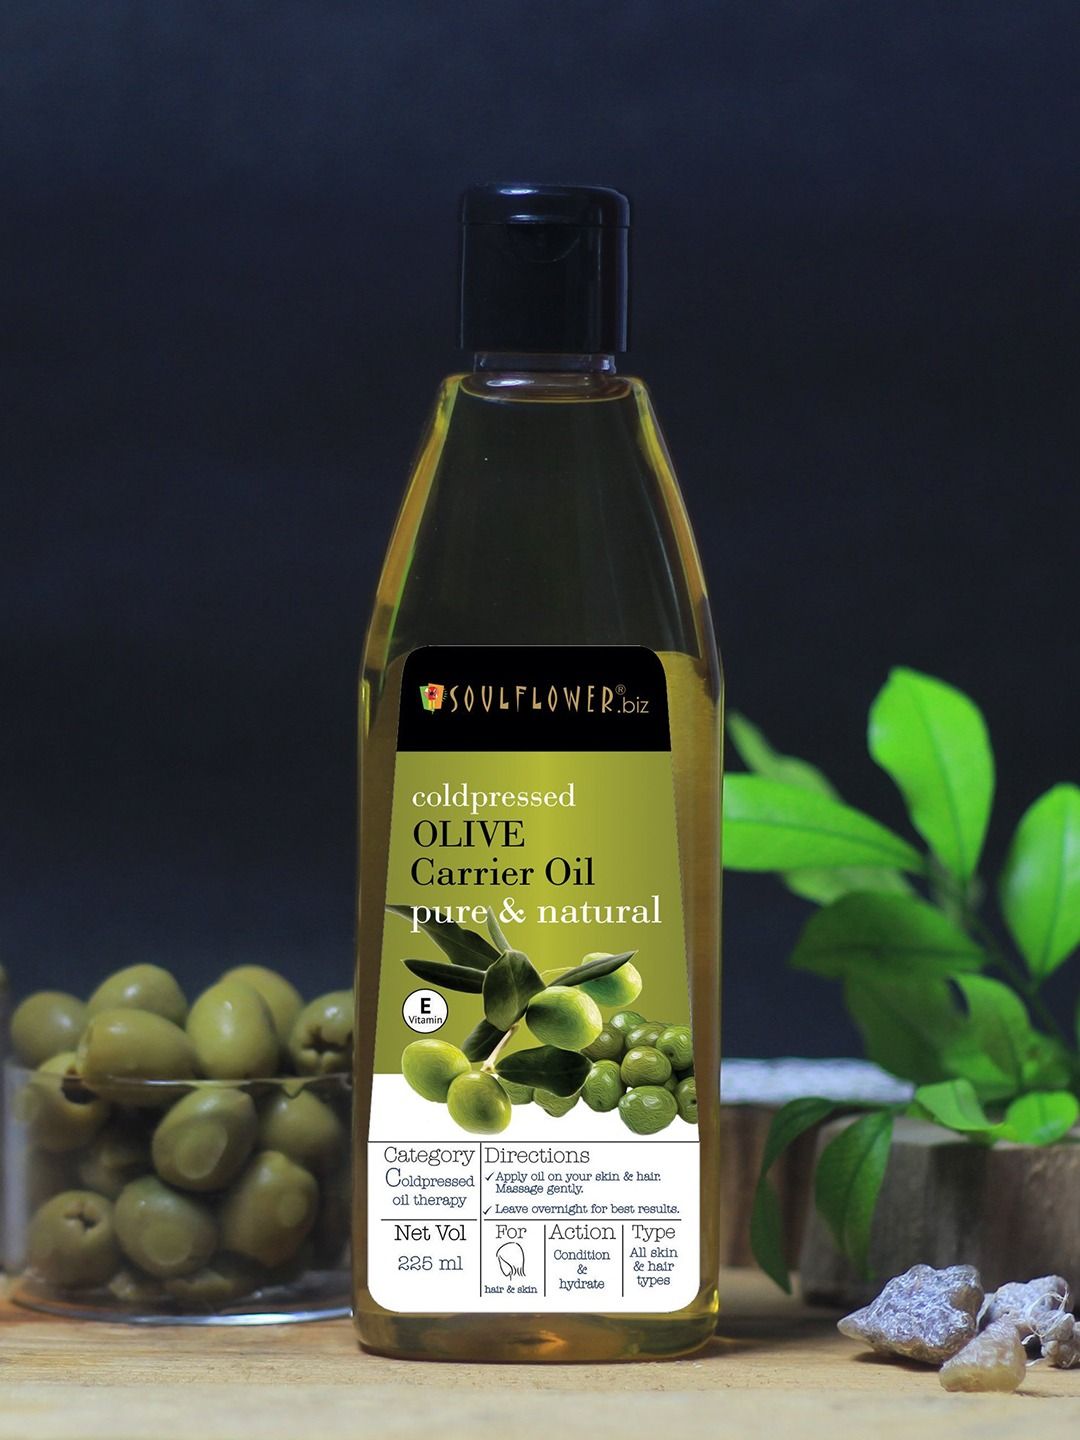 Soulflower Olive Hair Oil Cold Pressed 100% Natural Makeup Primer Skin Hair & Lip 225ml Price in India